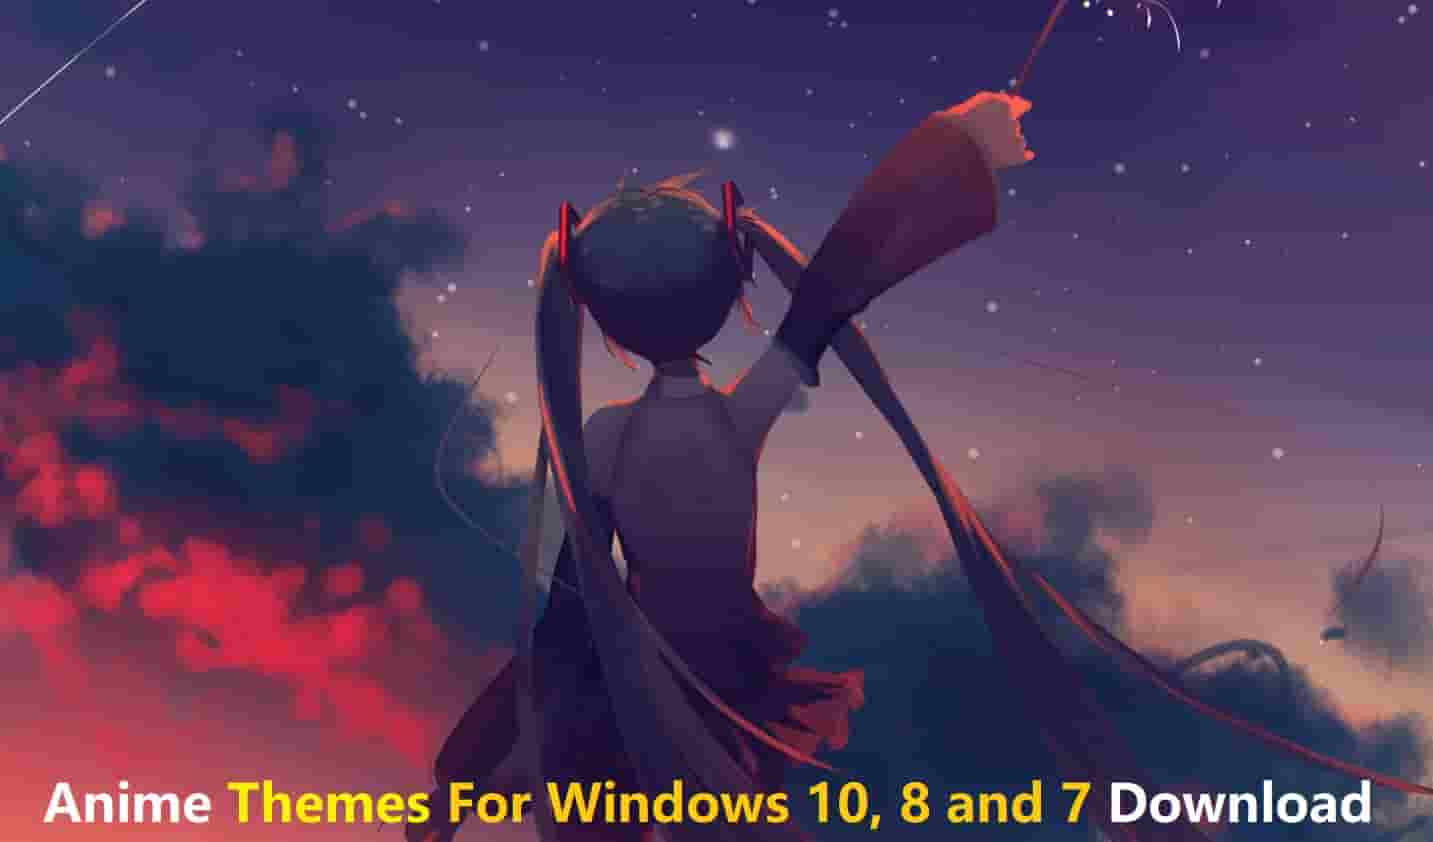 Anime themes for Windows 10  11